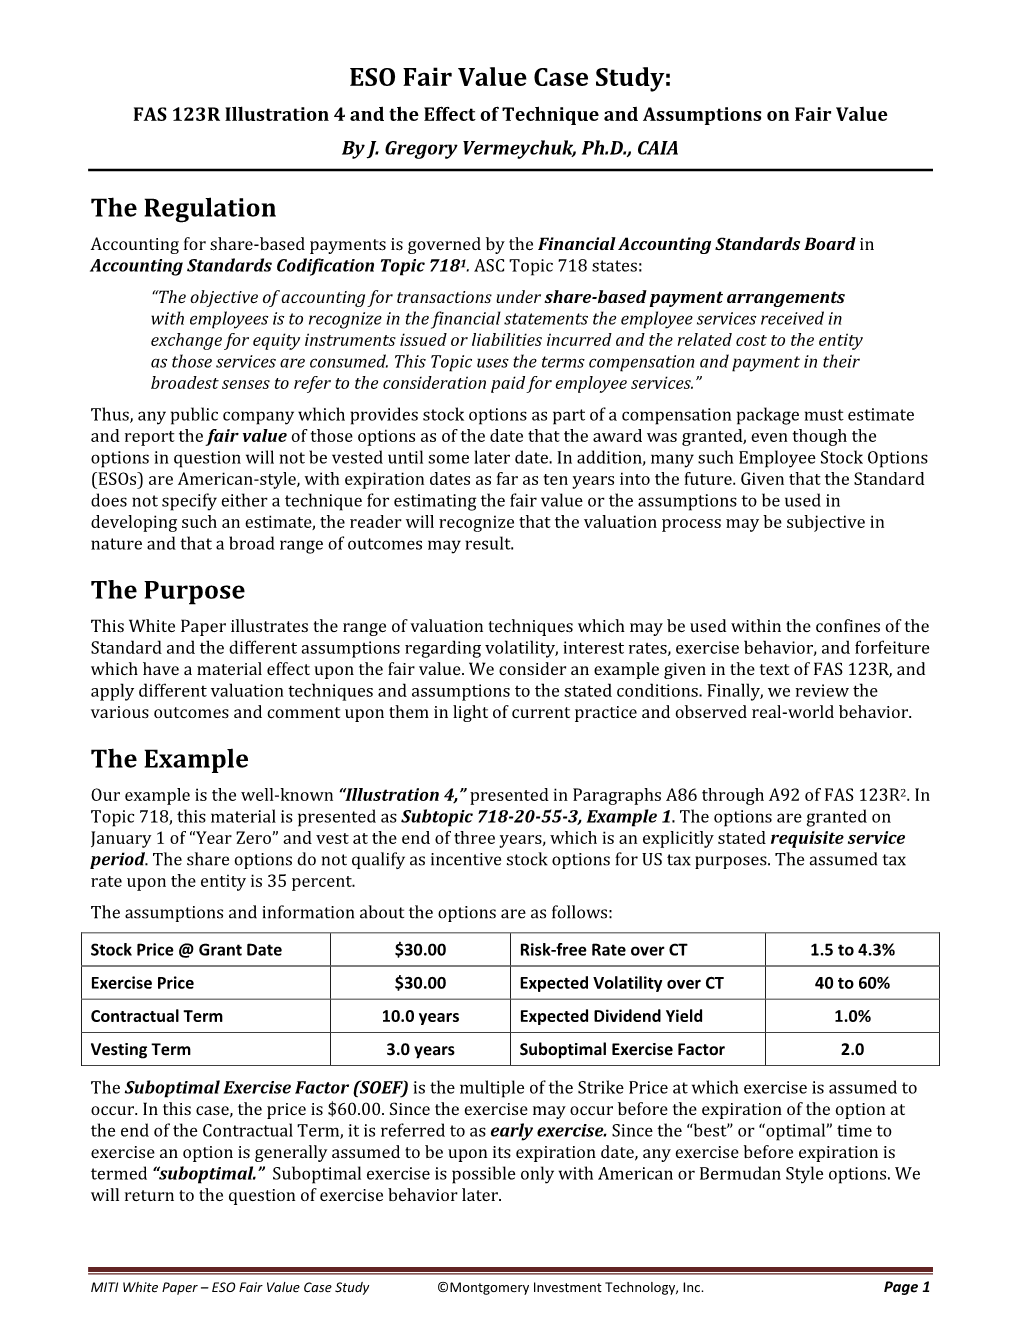 MITI White Paper – ESO Fair Value Case Study ©Montgomery Investment Technology, Inc